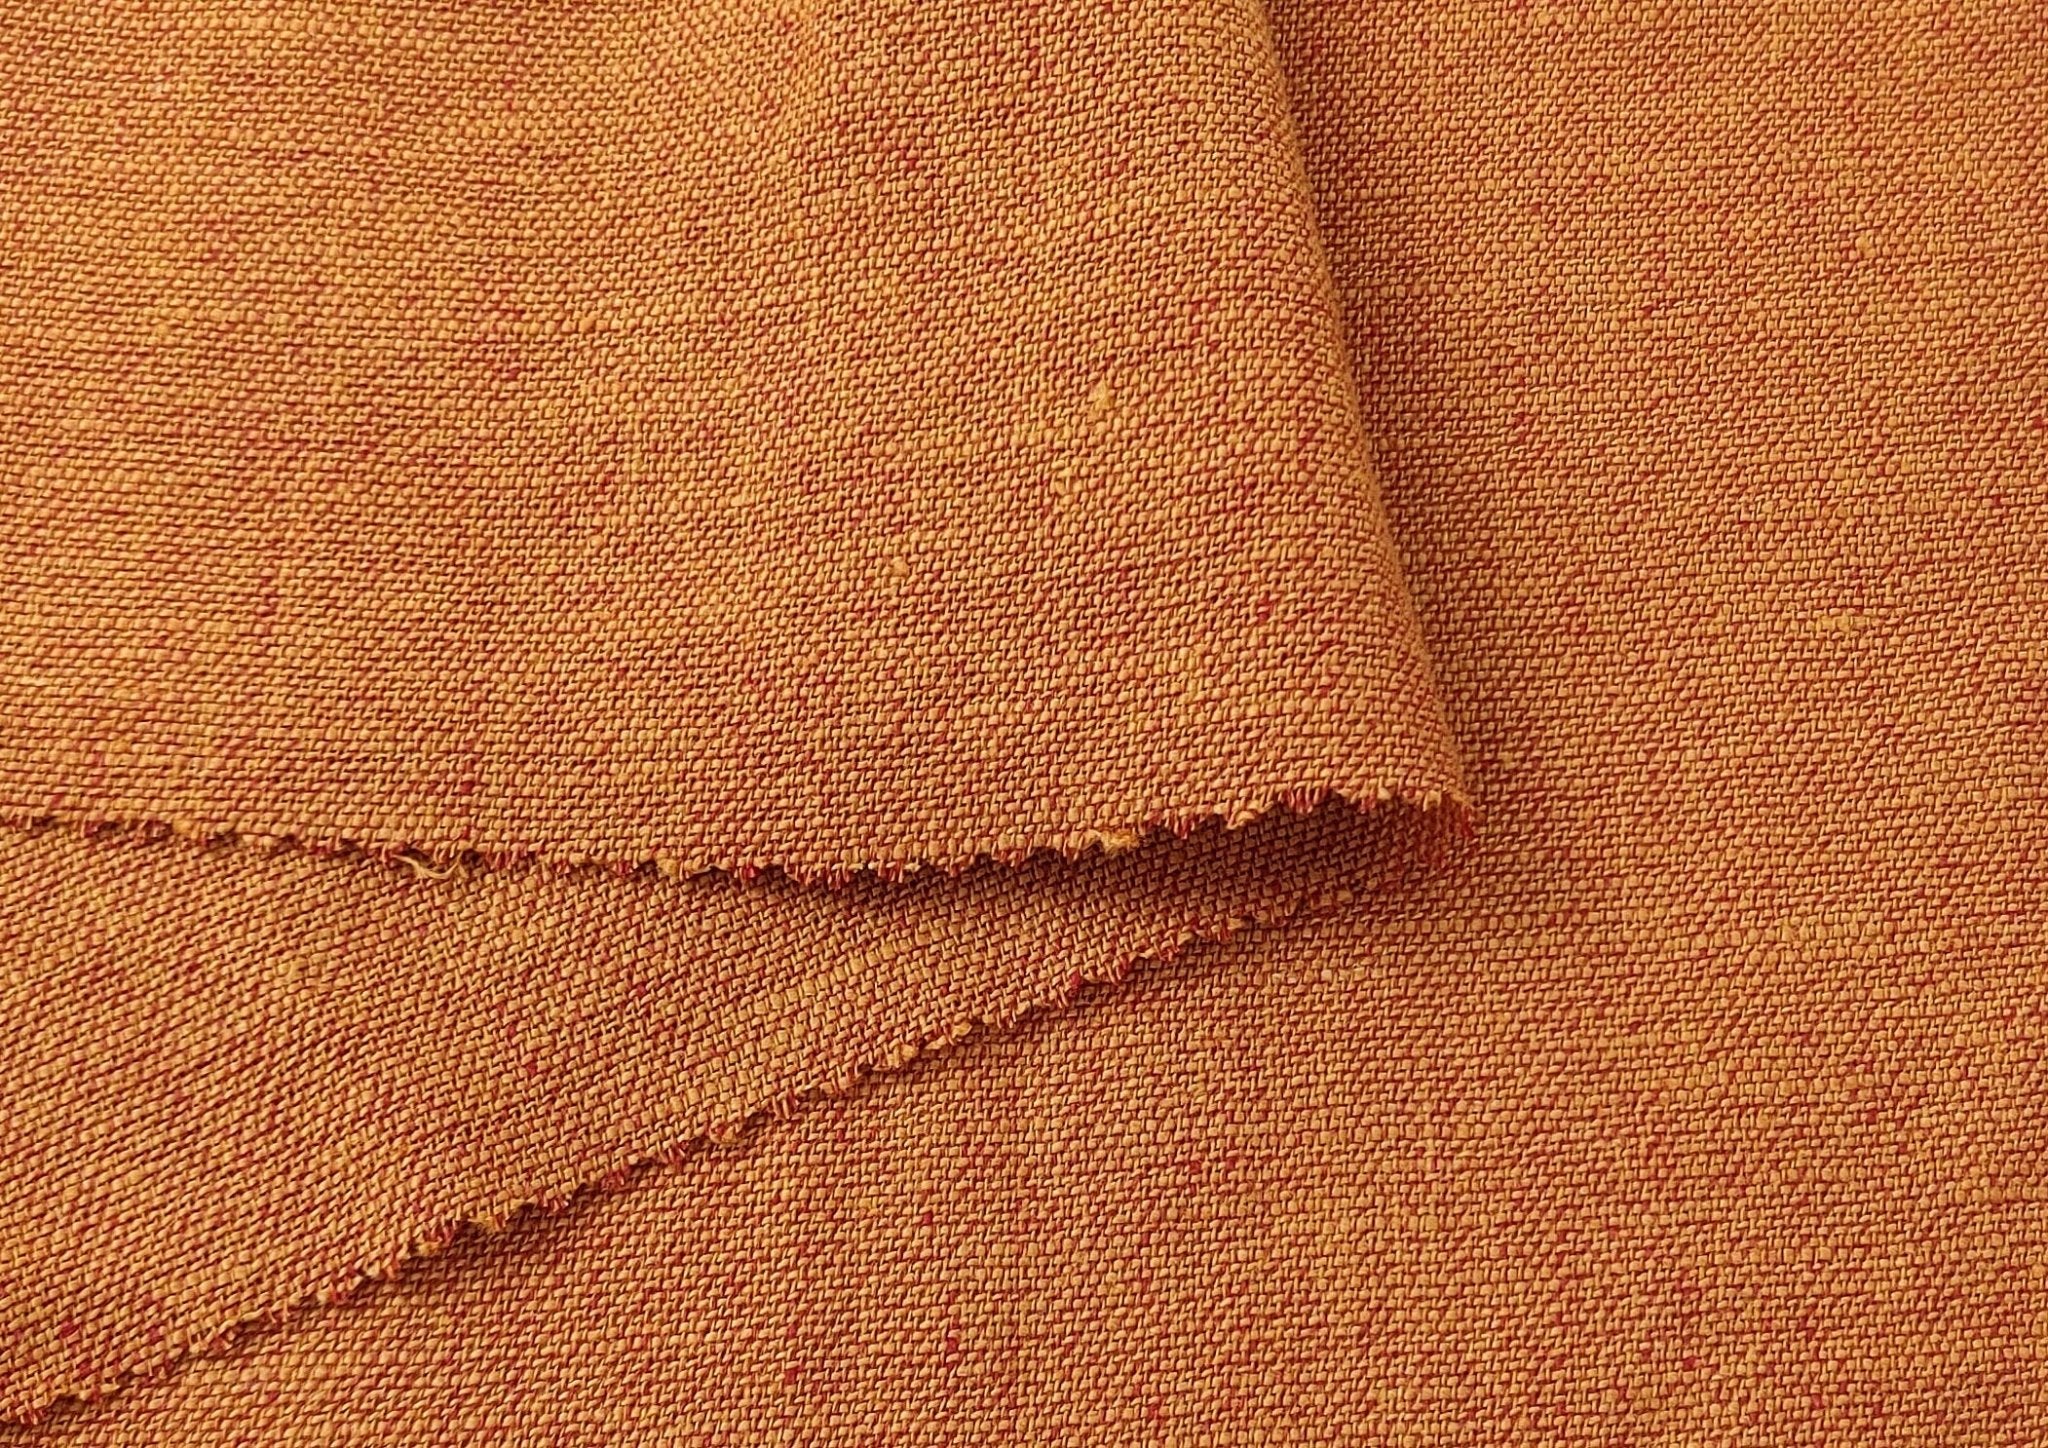 100% Linen Chambray Fabric in Heavyweight Orange Hue 7849 - The Linen Lab - Orange